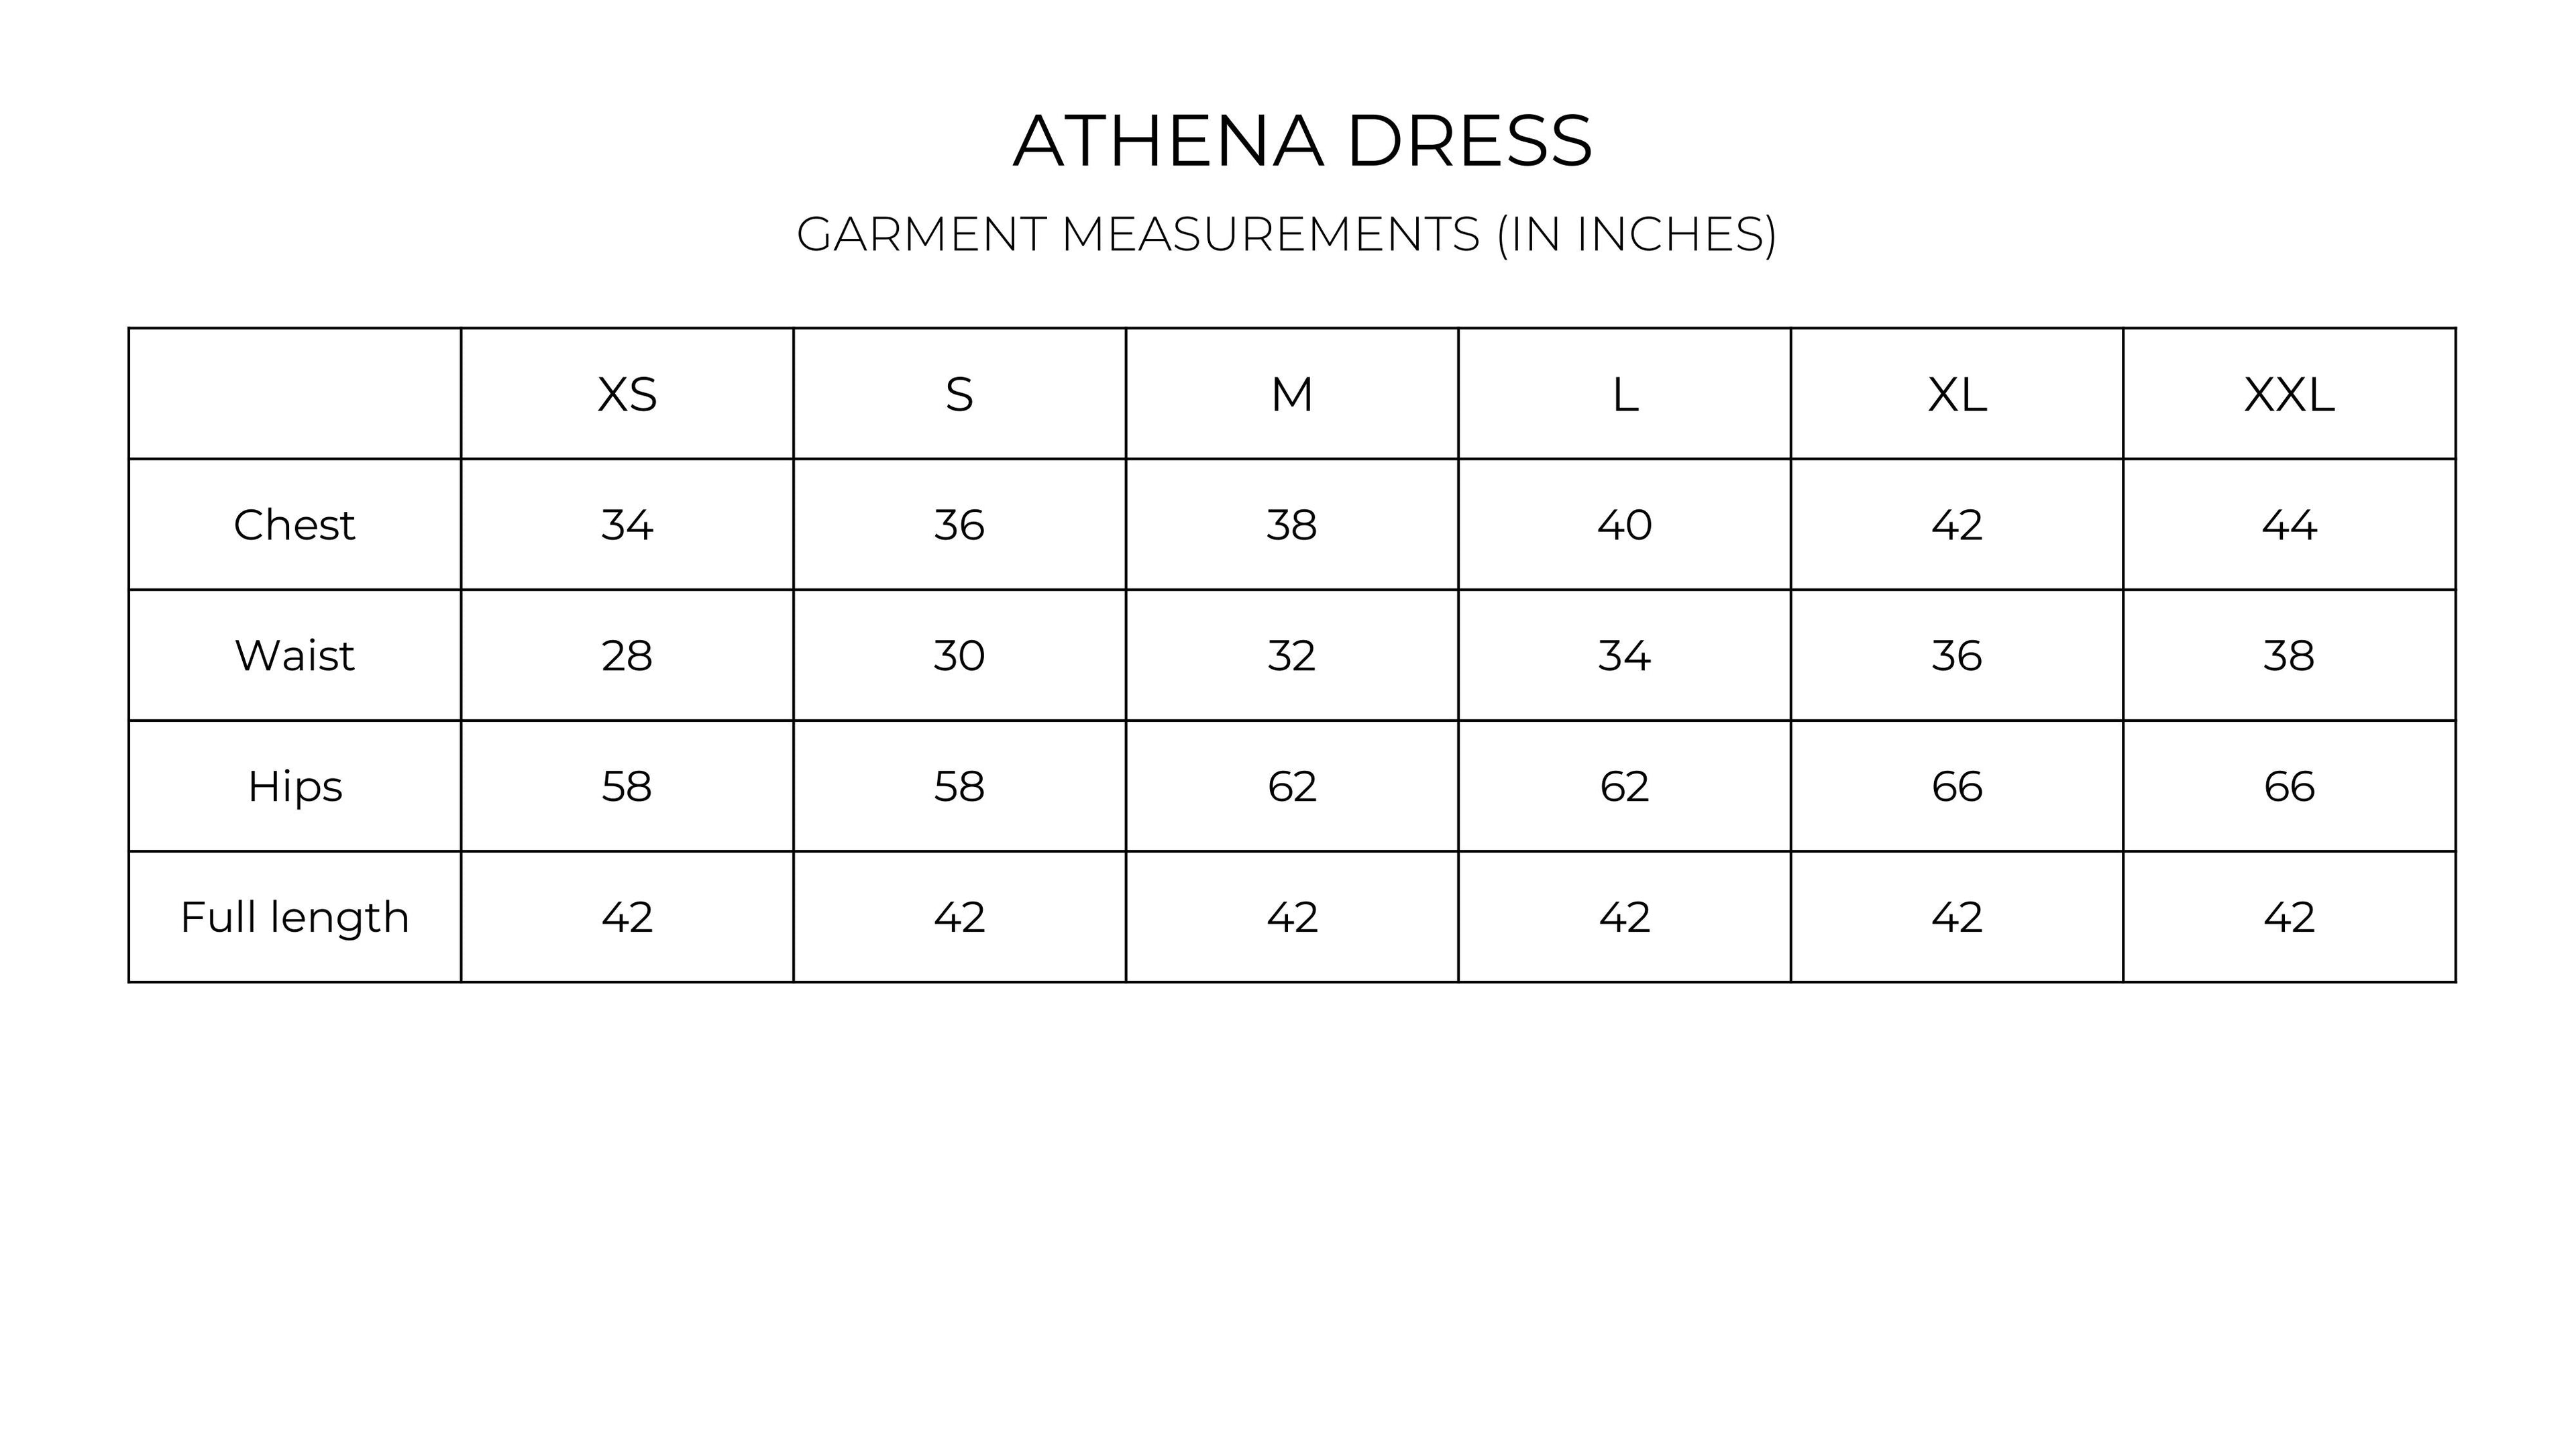 Athena dress